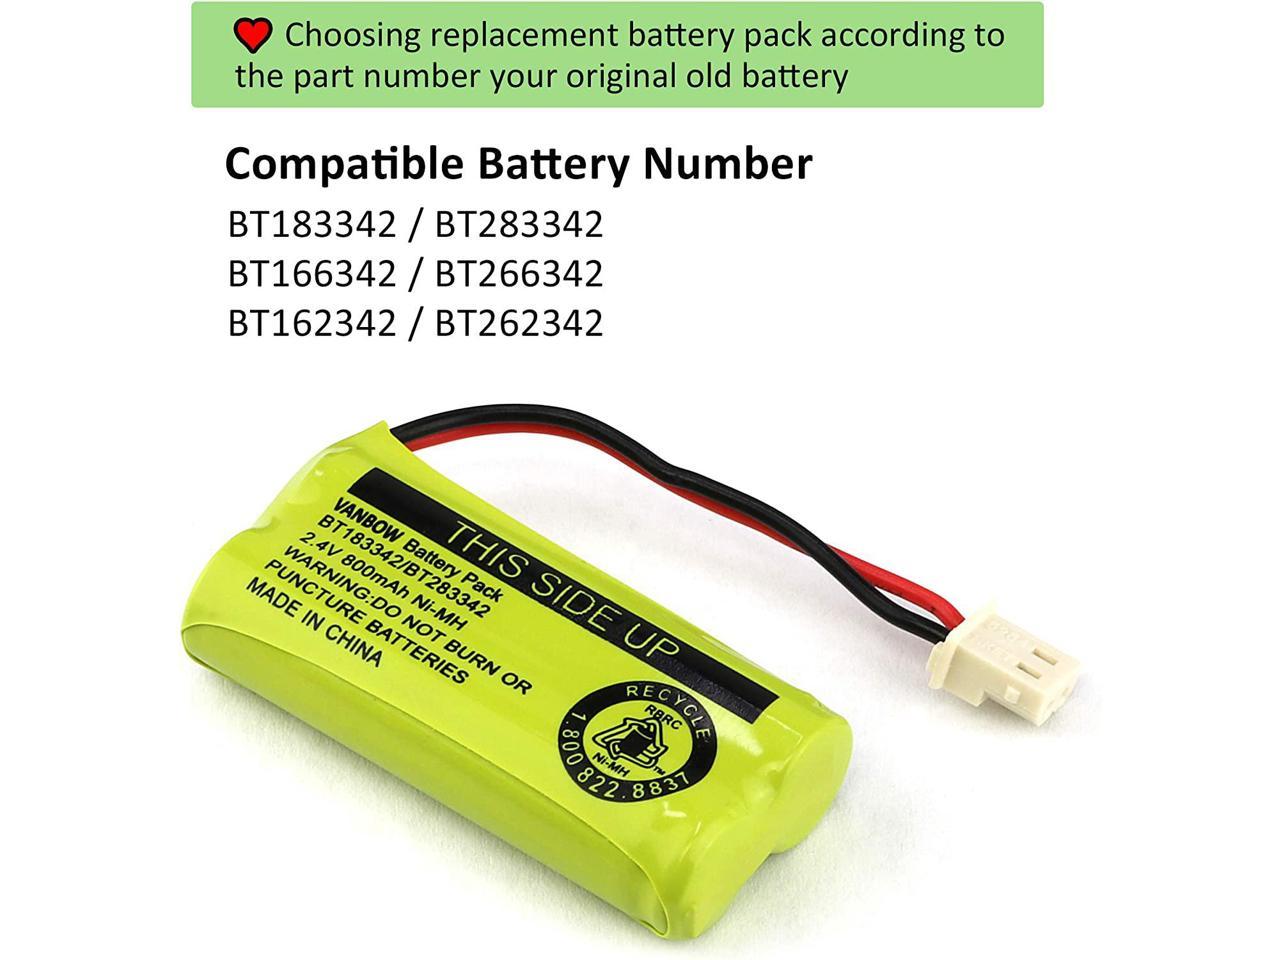 2 Pack DM221 BT183342/BT283342 2.4V 400mAh Ni-MH Battery Pack Also Compatible with AT&T VTech Cordless Phone Batteries BT166342/BT266342 BT162342/BT262342 CS6709 CS6609 CS6509 CS6409 EL52100 EL50003 